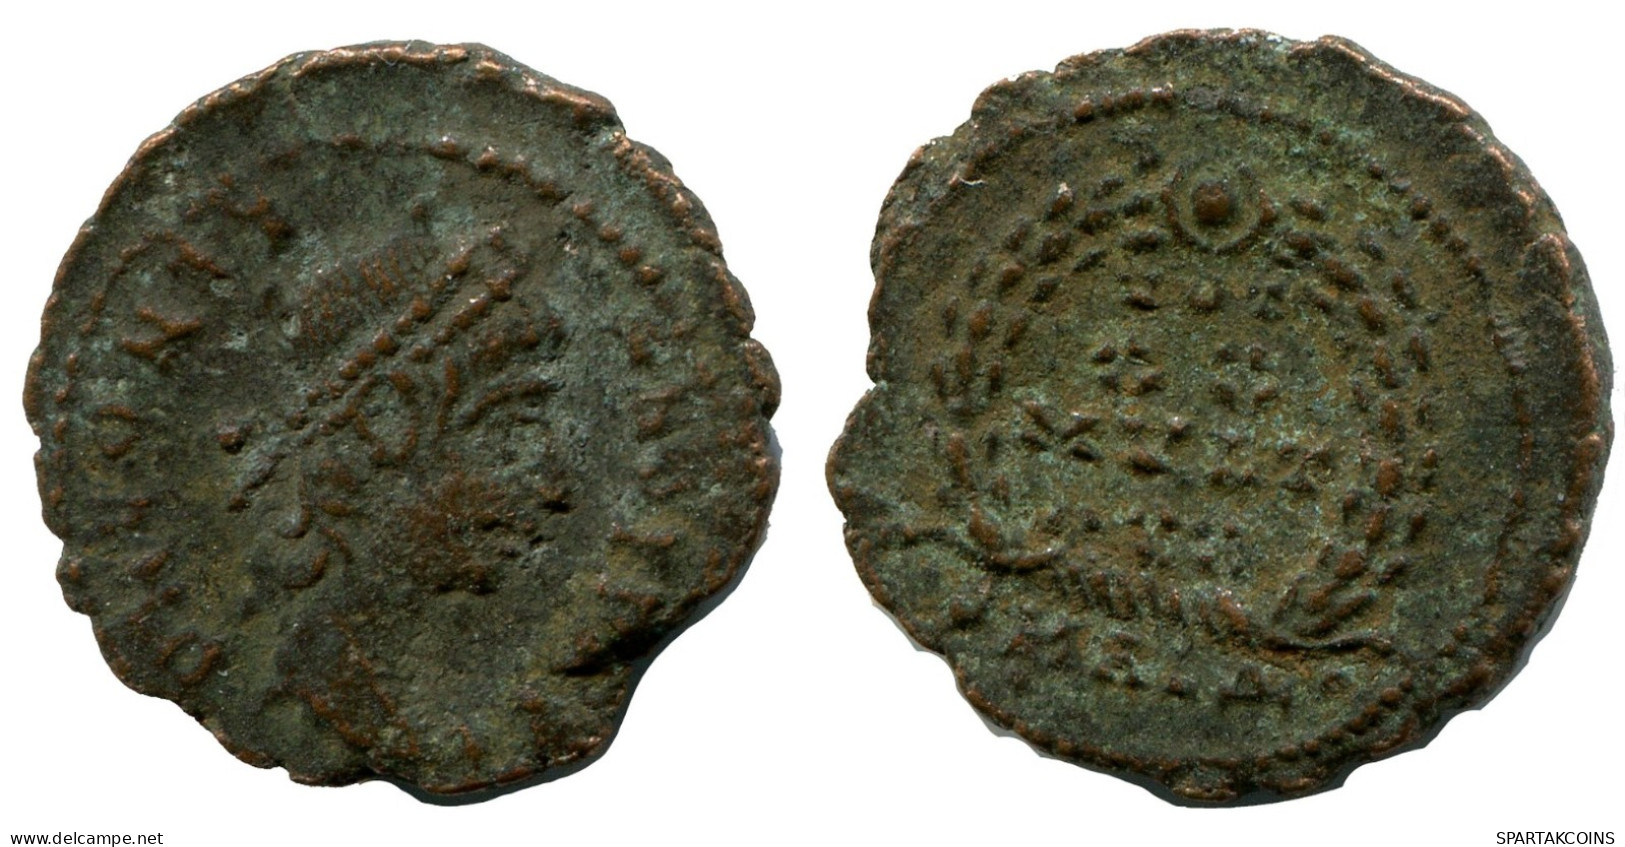 CONSTANTIUS II MINTED IN ALEKSANDRIA FOUND IN IHNASYAH HOARD #ANC10500.14.D.A - El Impero Christiano (307 / 363)